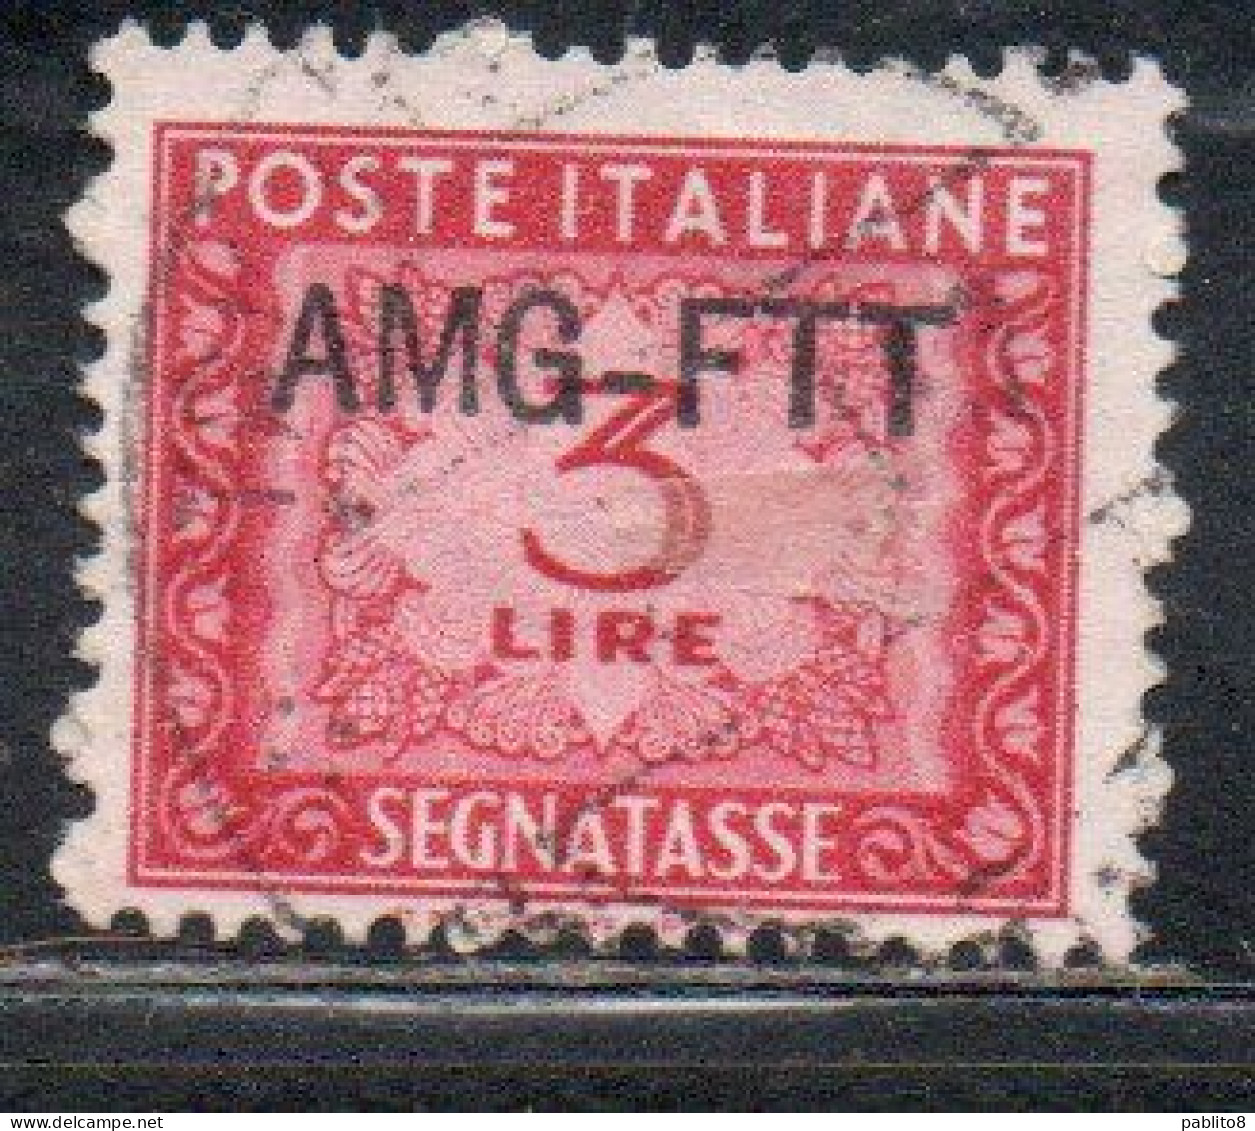 TRIESTE A 1949 1954AMG-FTT SOPRASTAMPATO D'ITALIA ITALY OVERPRINTED SEGNATASSE POSTAGE DUE TAXES TASSE LIRE 3 USATO USED - Portomarken